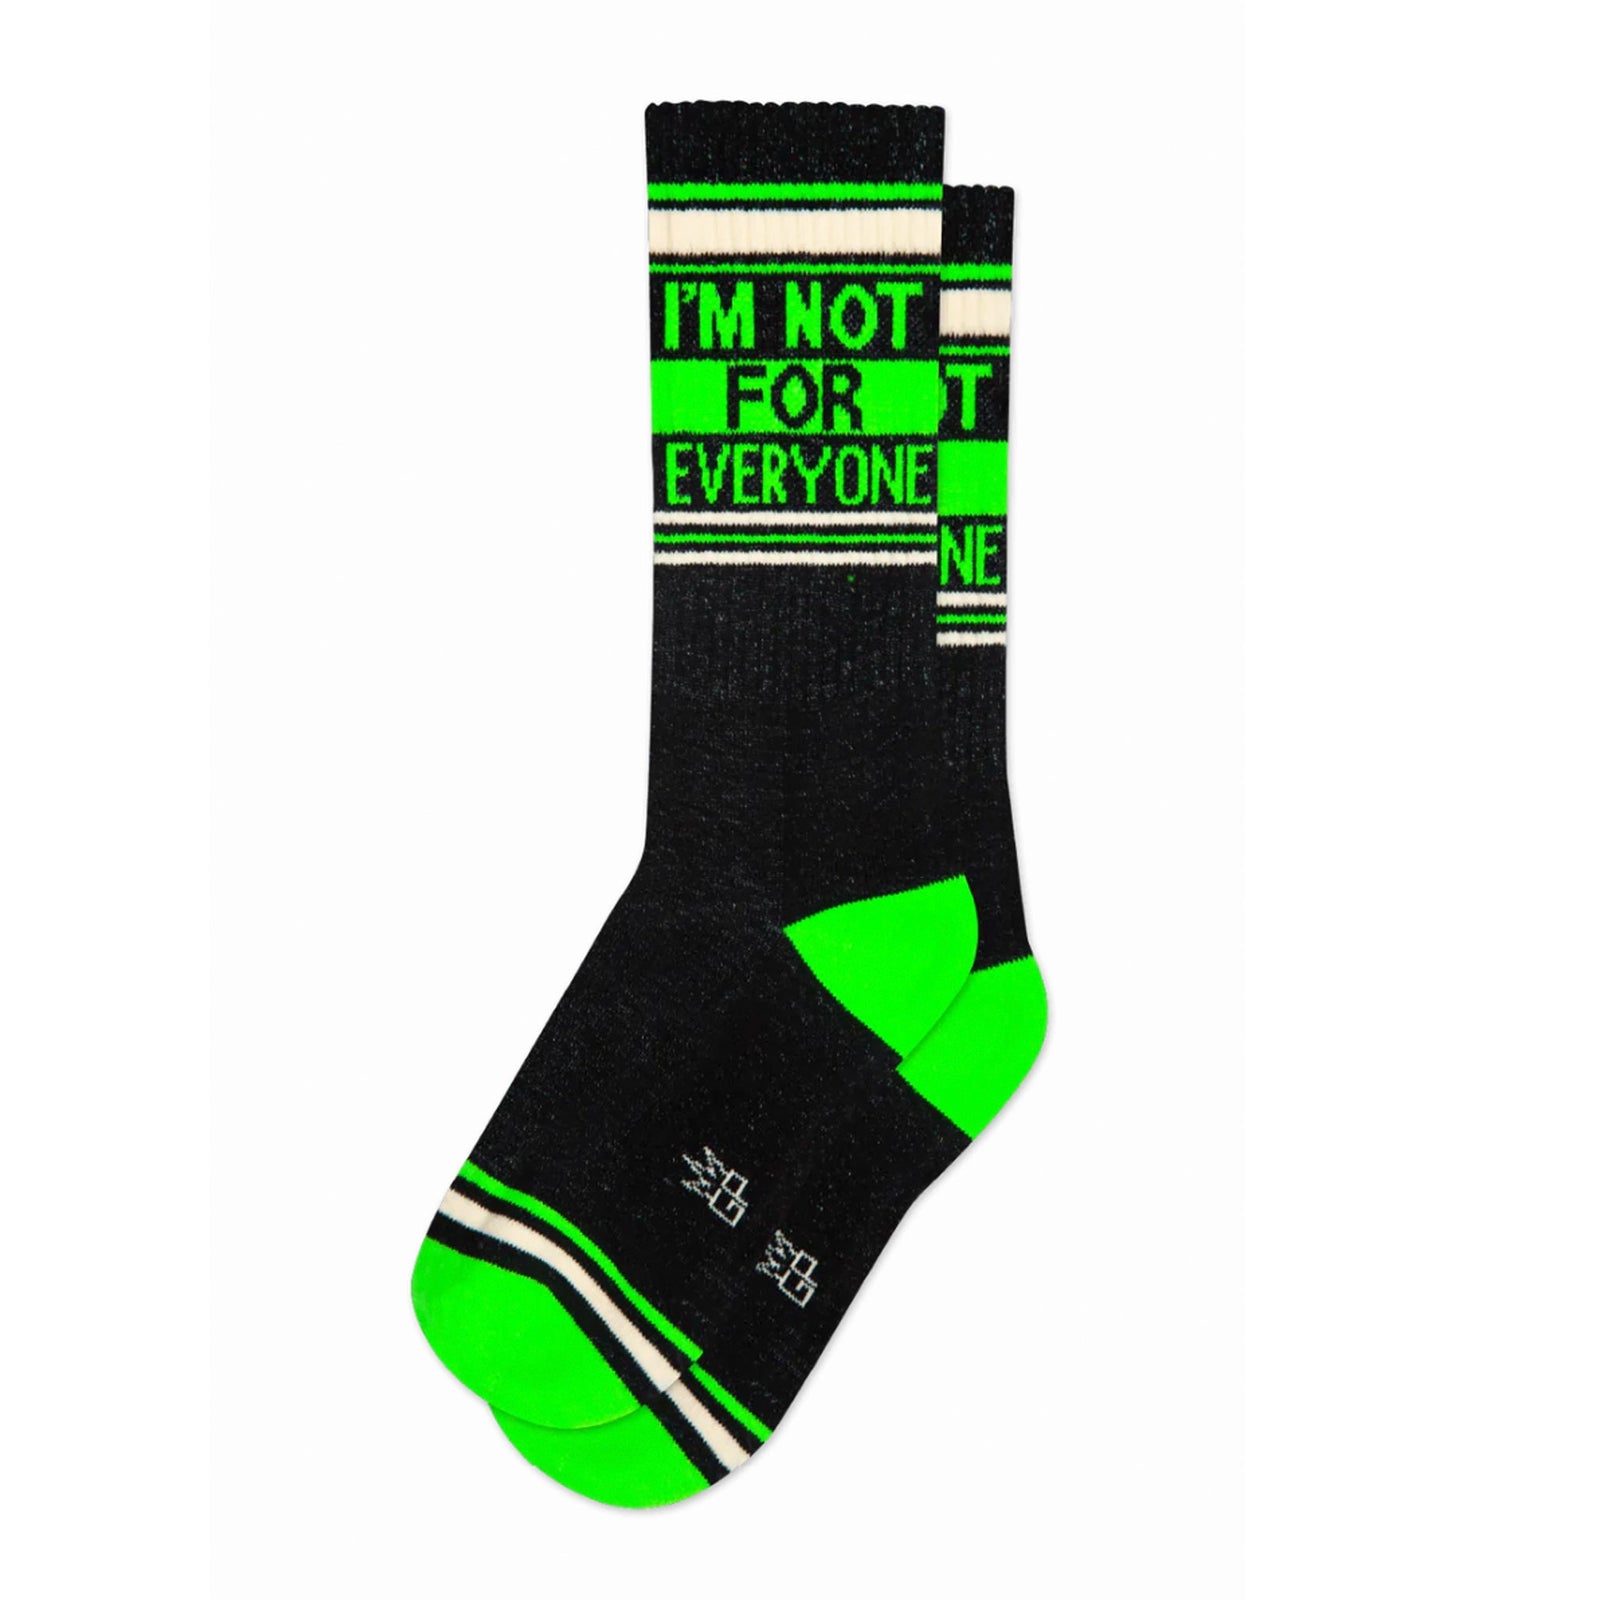 Im Not For Everyone Gym Socks - [aka]